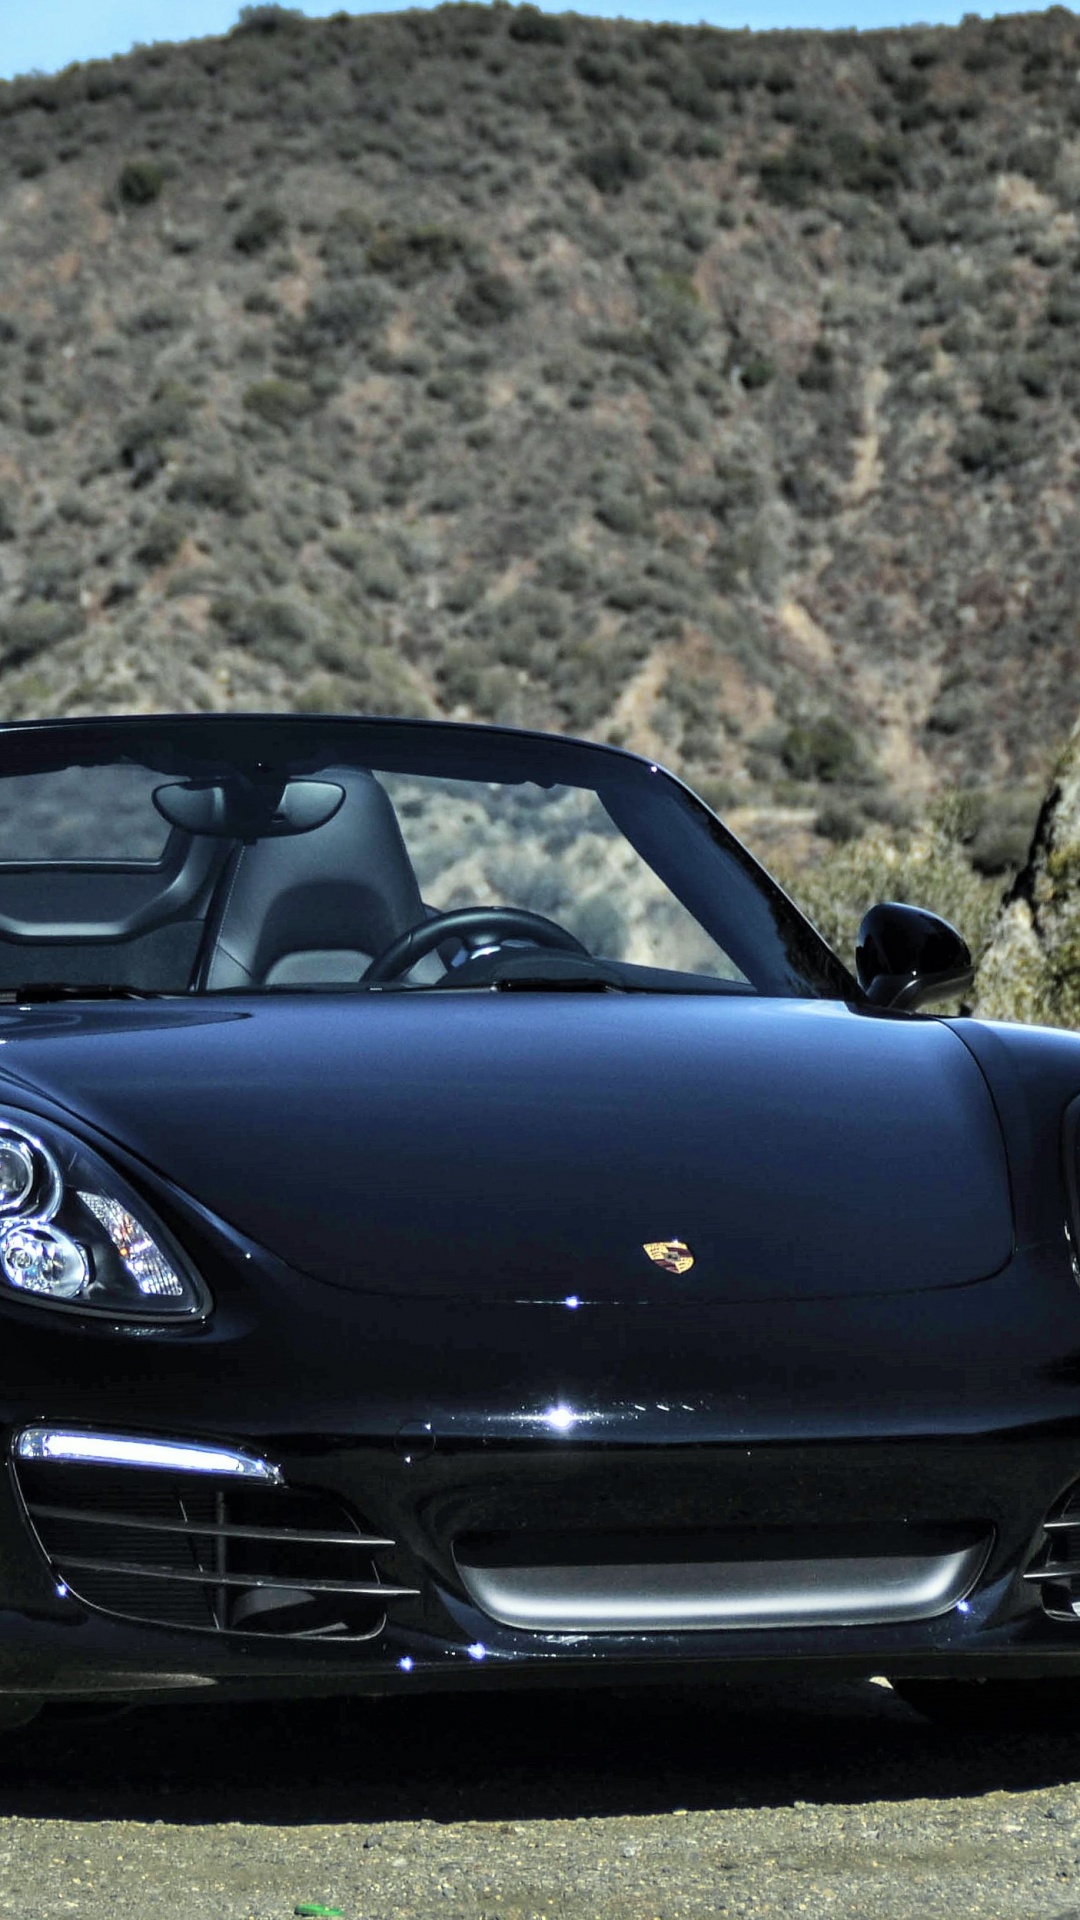 Black Porsche 911 on Brown Dirt Road During Daytime. Wallpaper in 1080x1920 Resolution